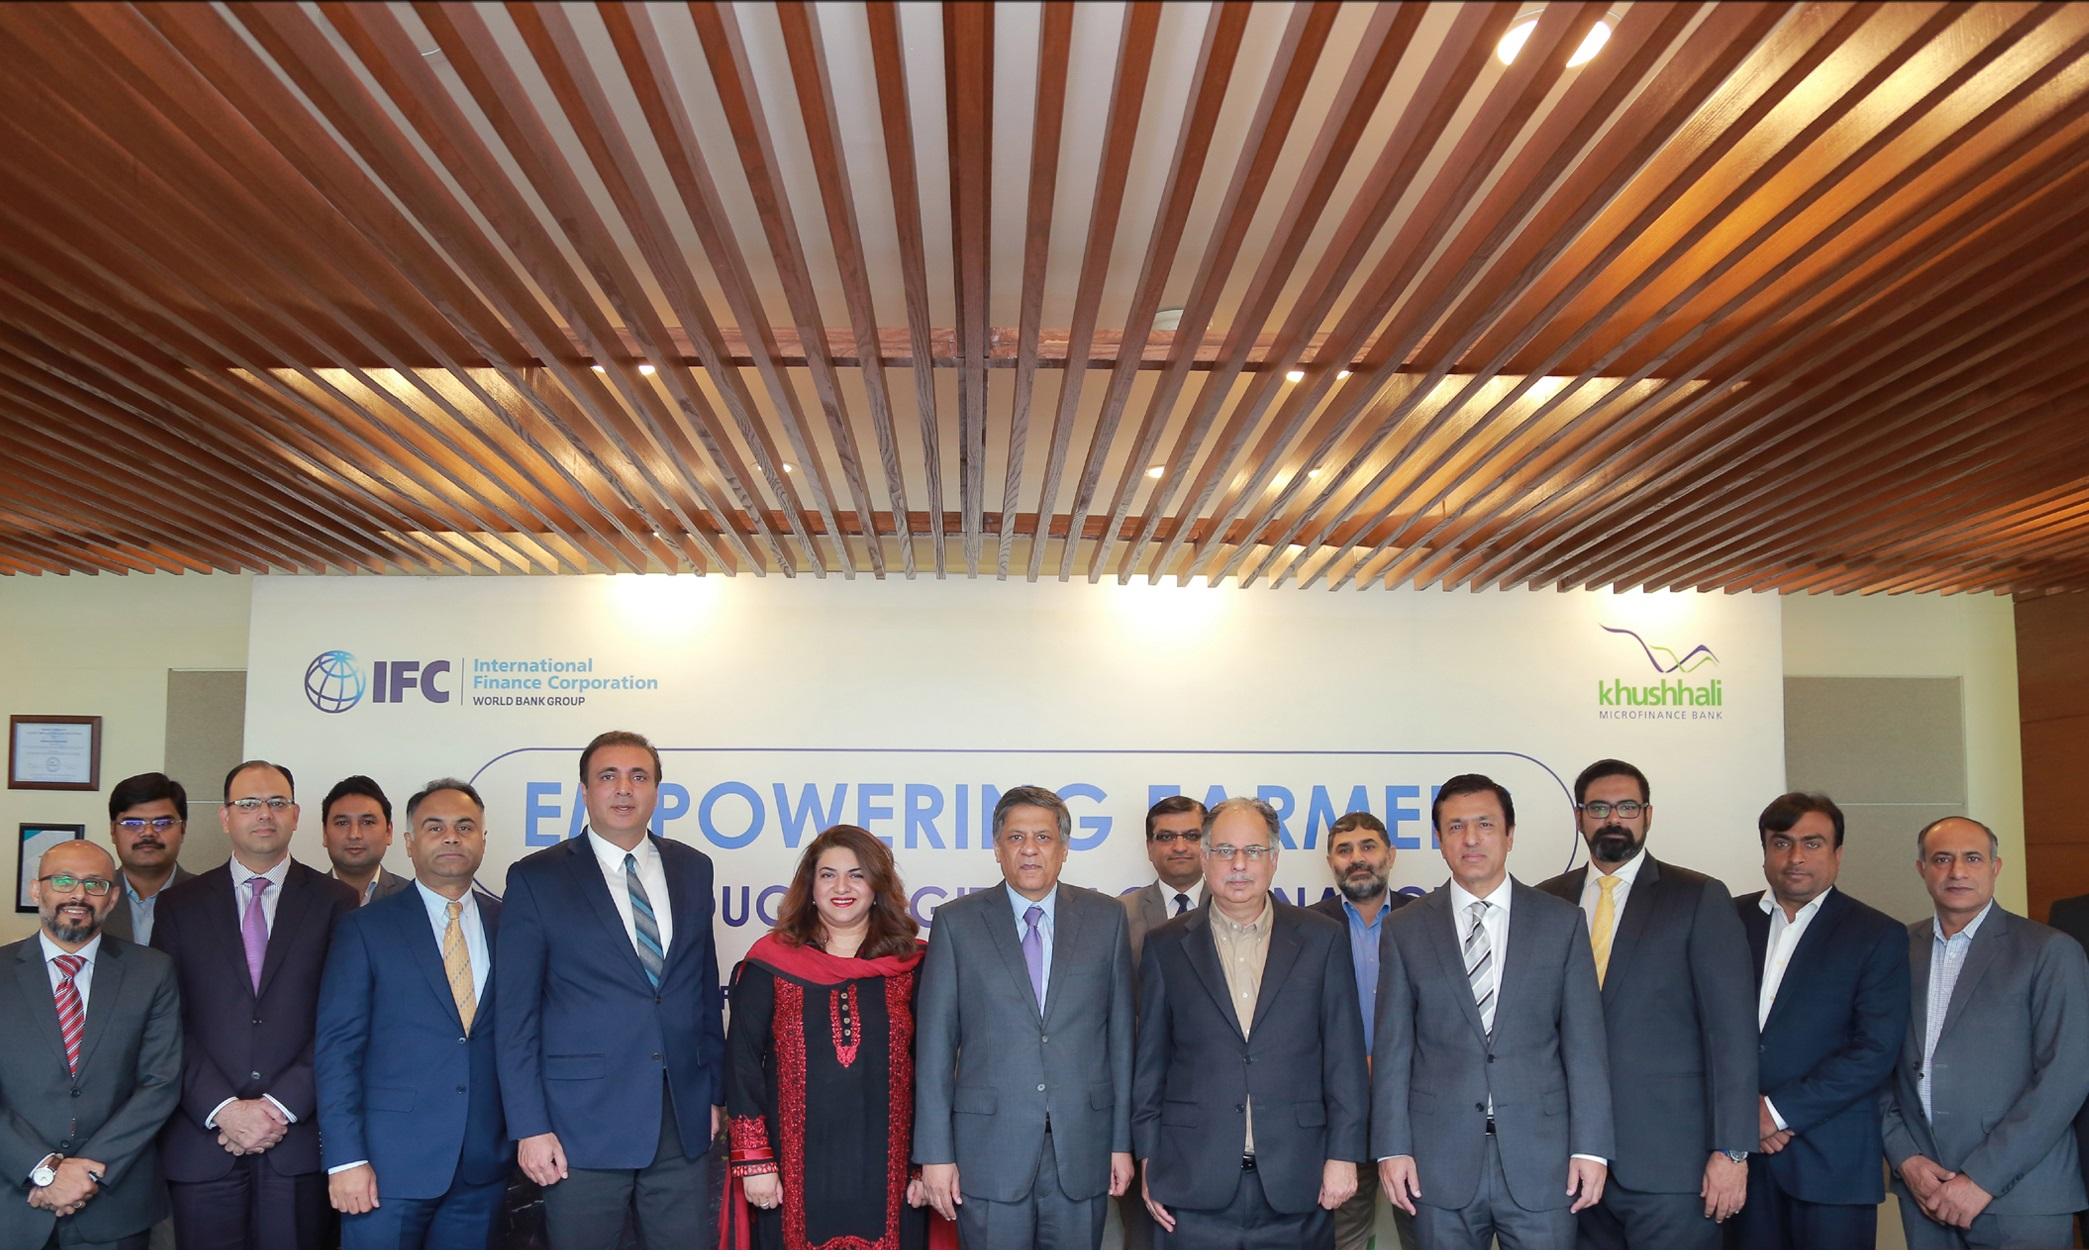 IFC and Khushhali Microfinance Bank to Initiate Collaboration in Agri-digital Finance